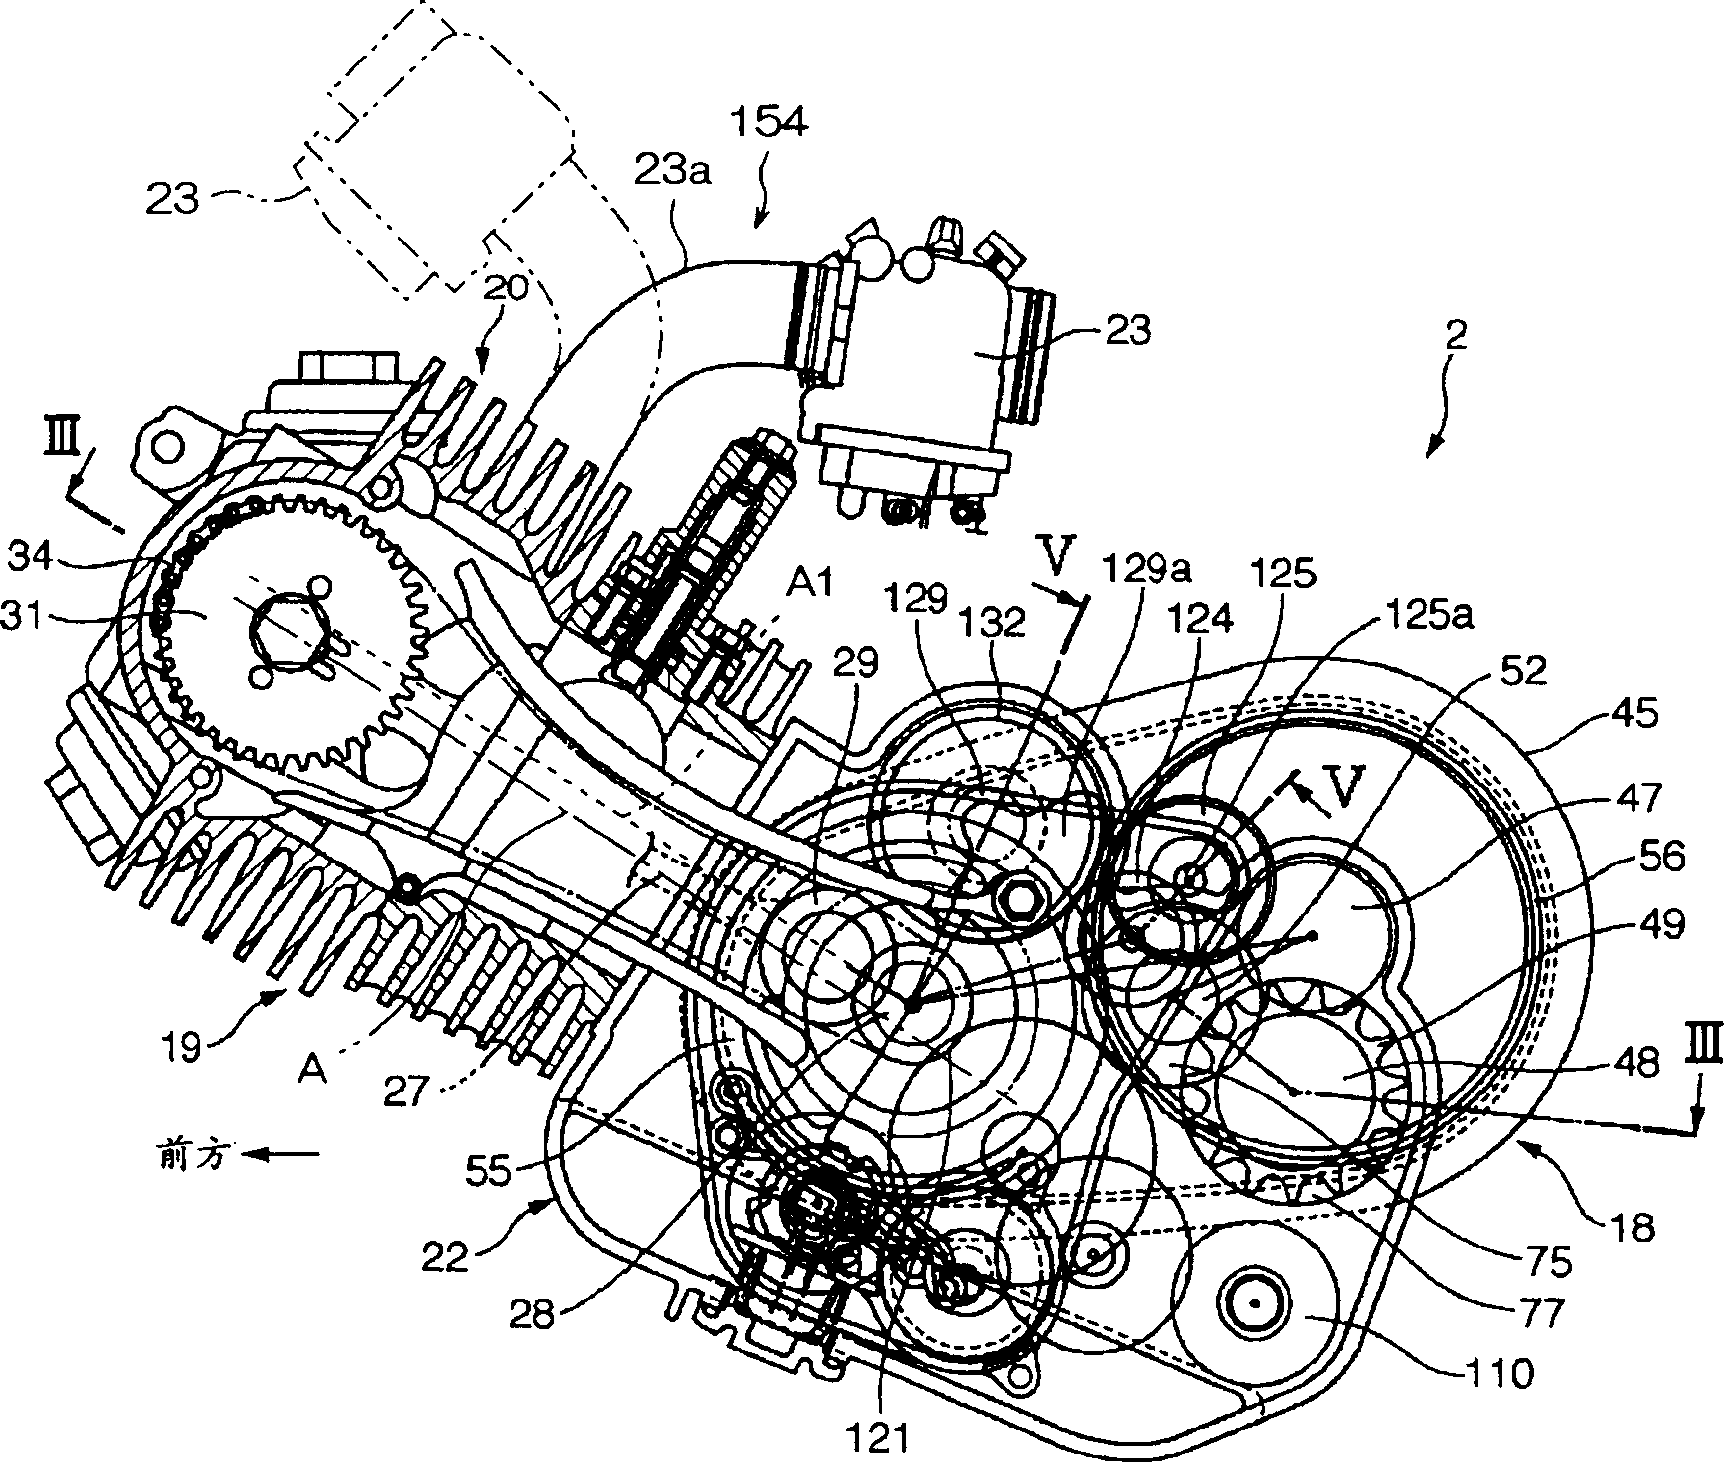 Engine for saddle riding-type vehicle and saddle riding-type vehicle with the same